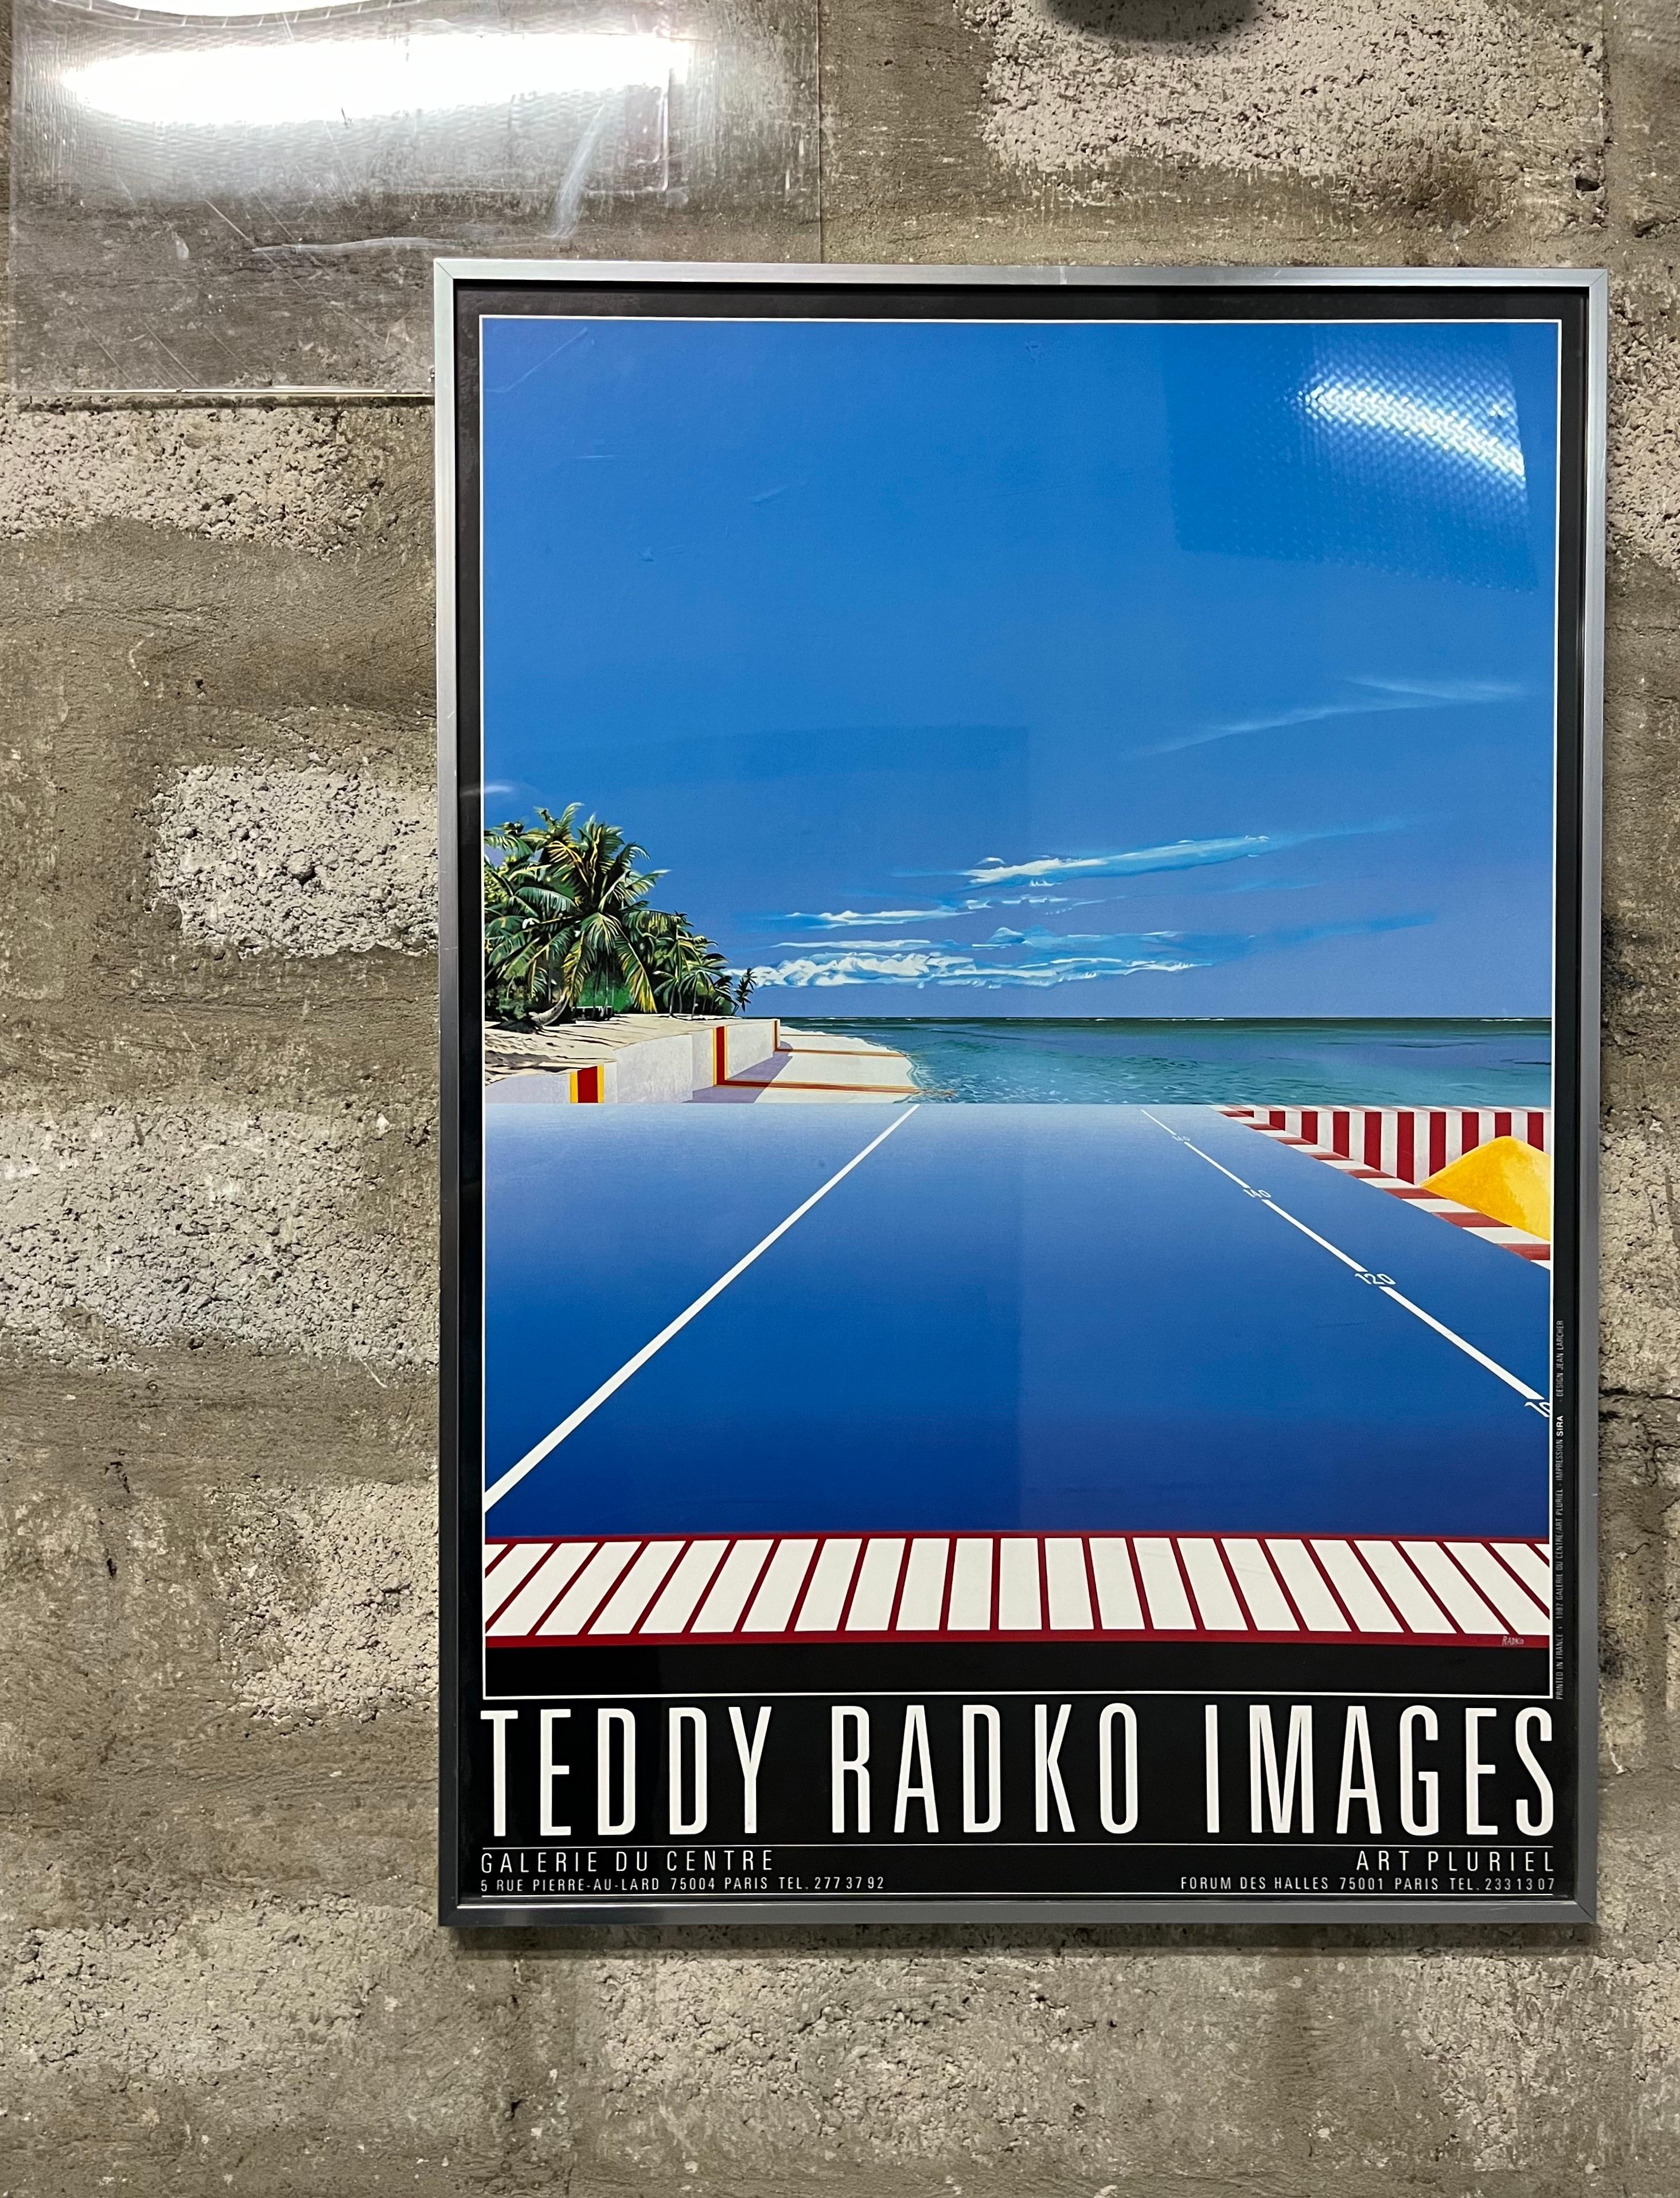 Original gerahmtes Originalplakat, Teddy Radko Images Exhibition, 1980er Jahre. (Postmoderne) im Angebot